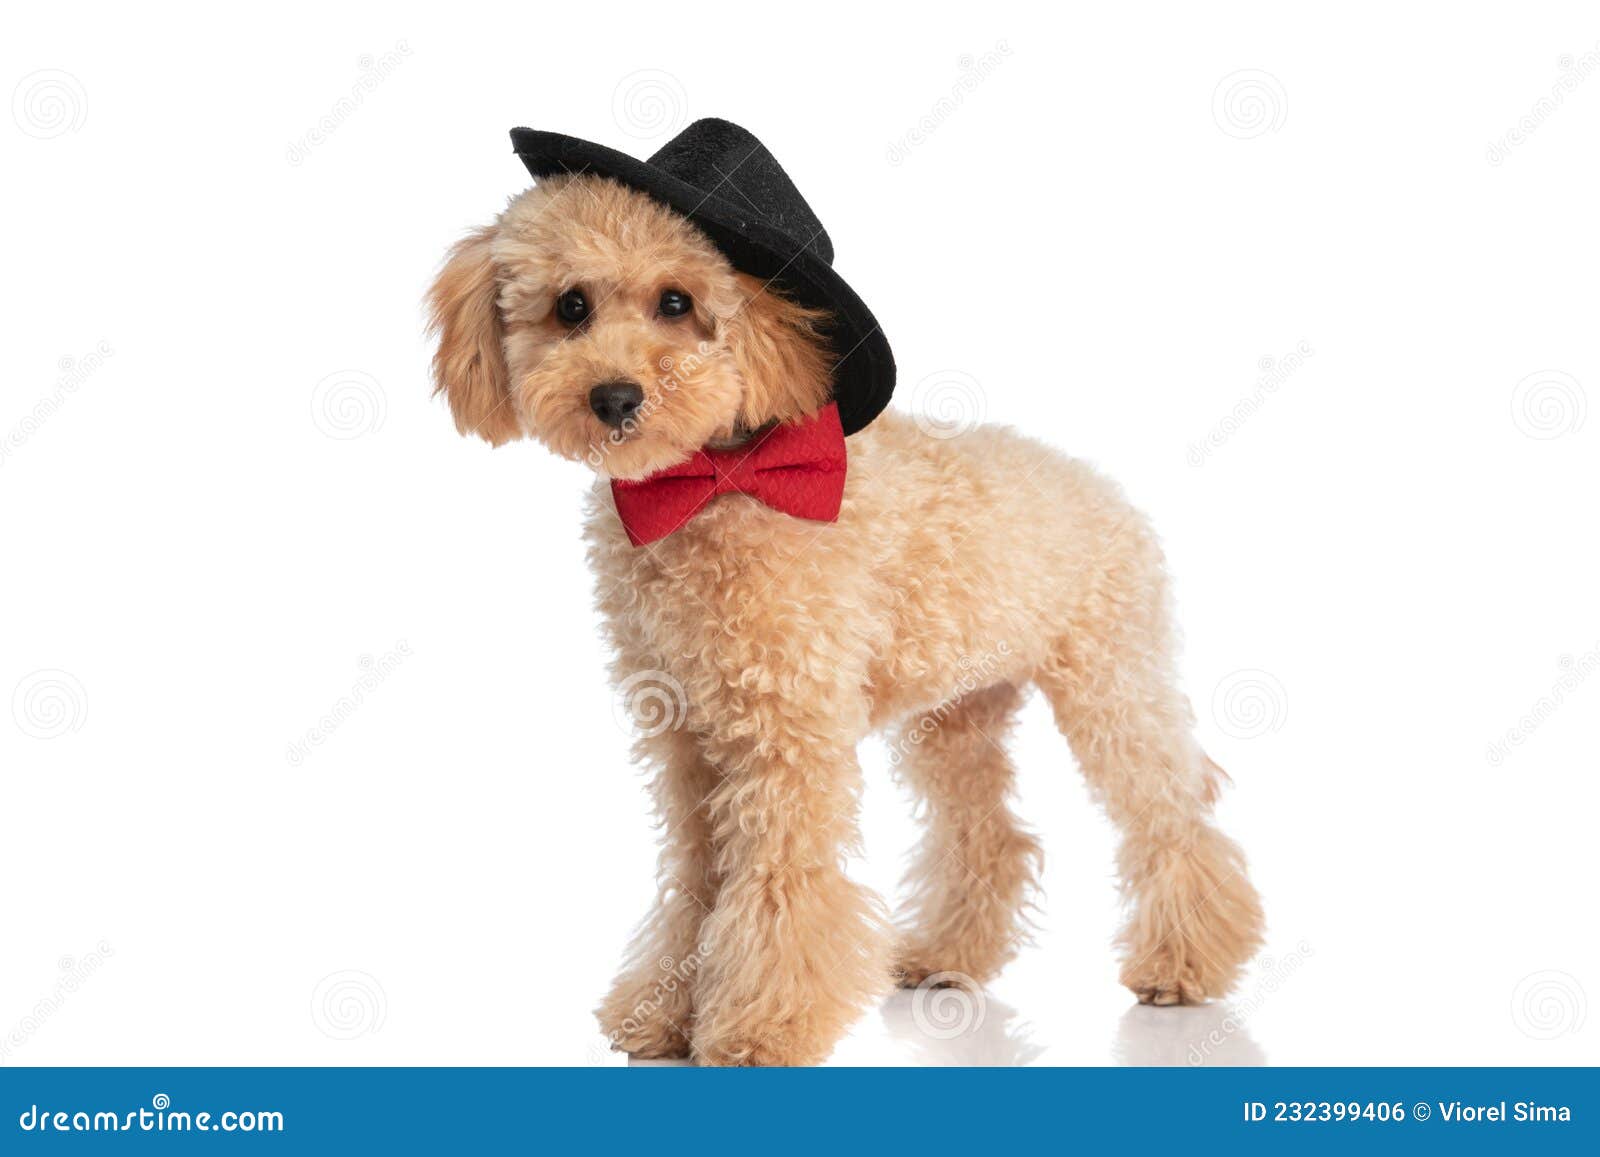 caniche dog wearing his hat like a cowboy